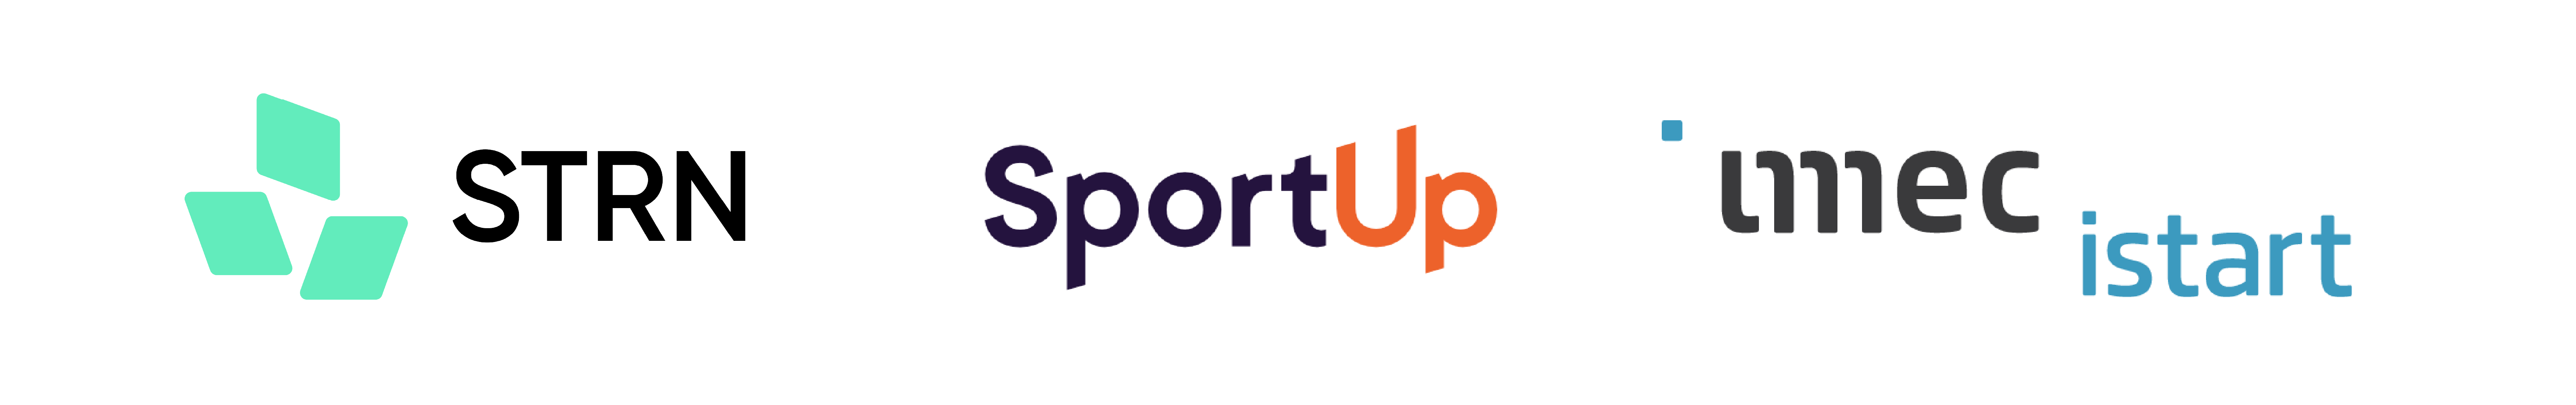 Logos of STRN, SportUp and Imec iStart